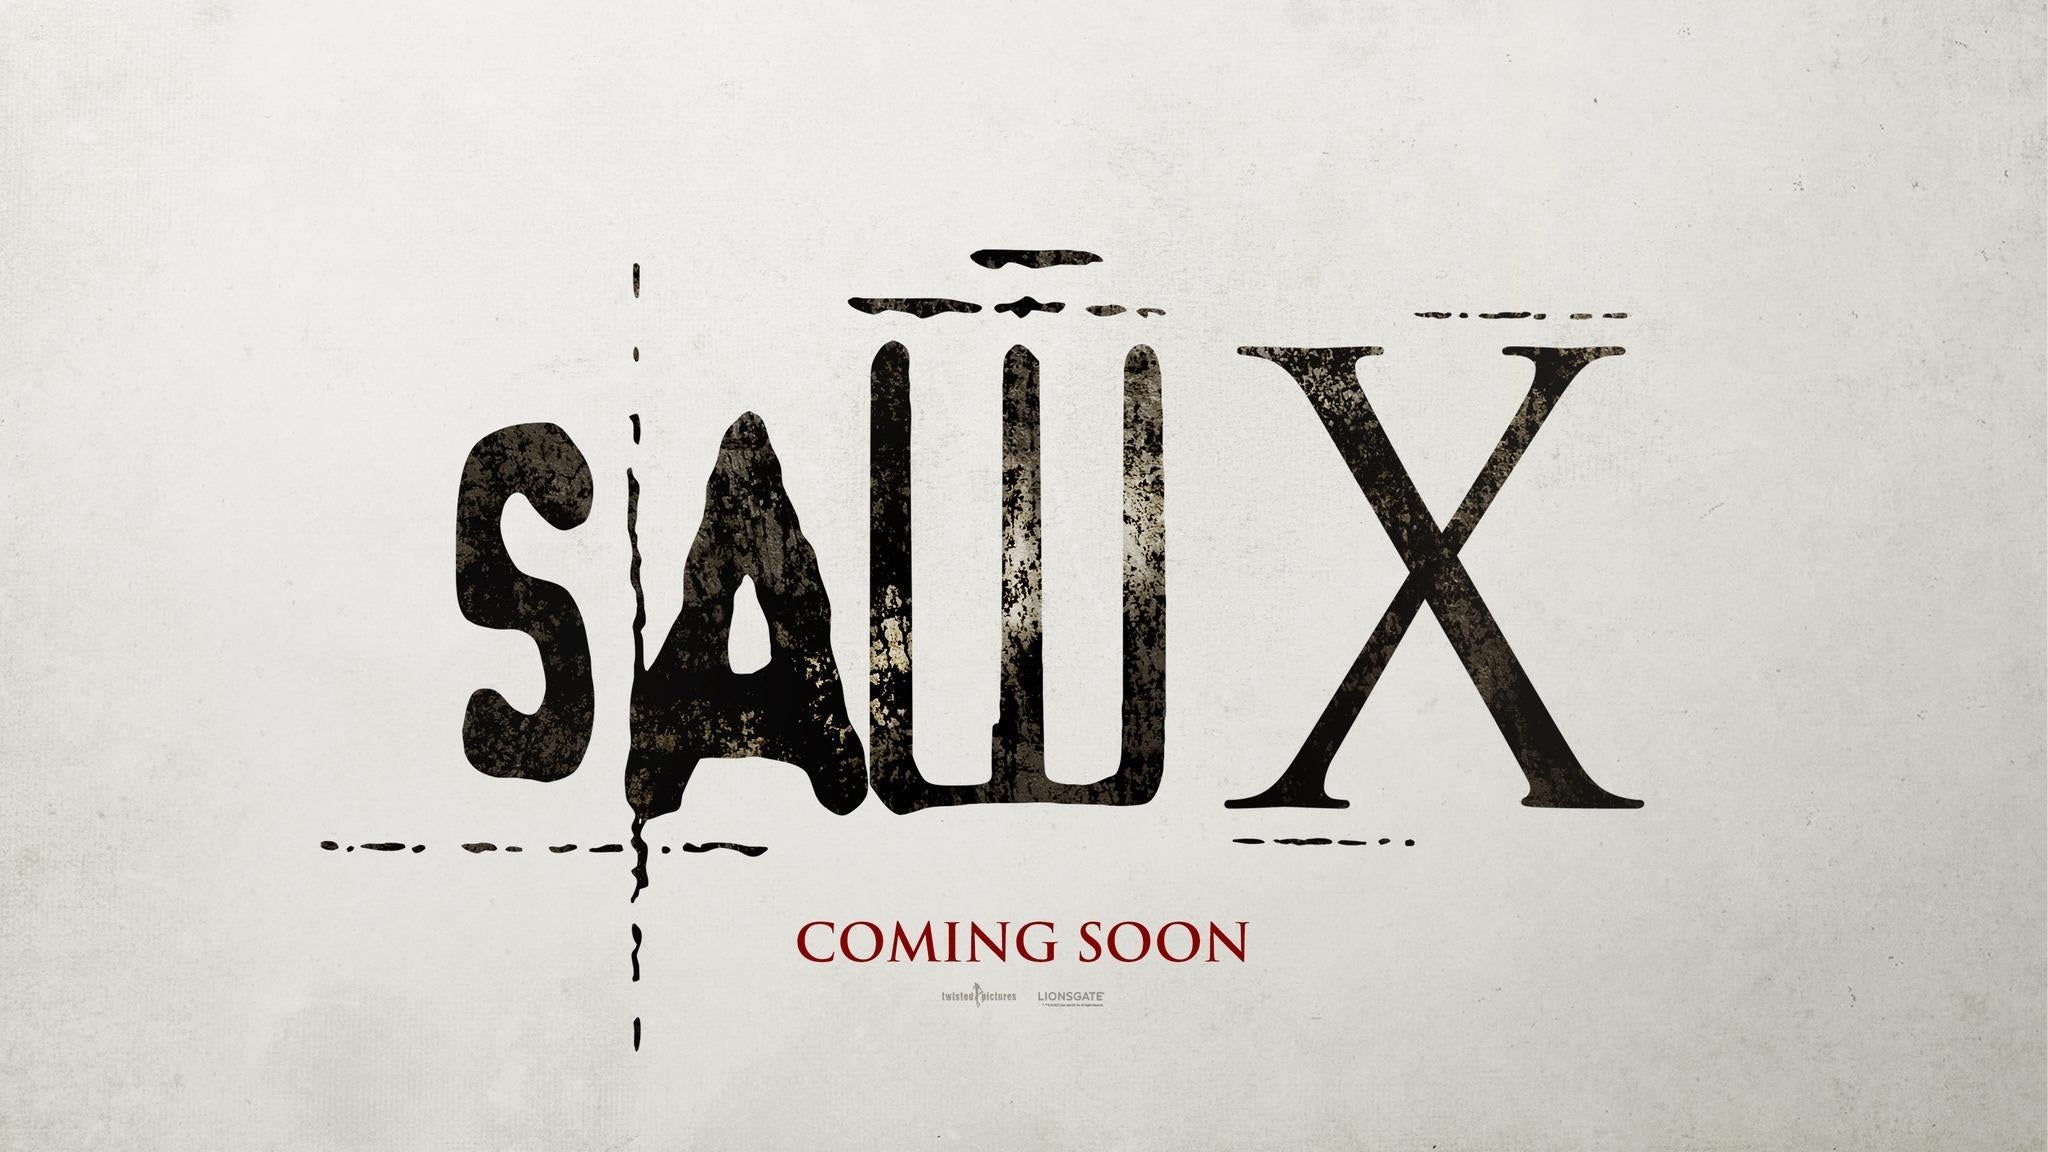 saw-x-logo.jpg